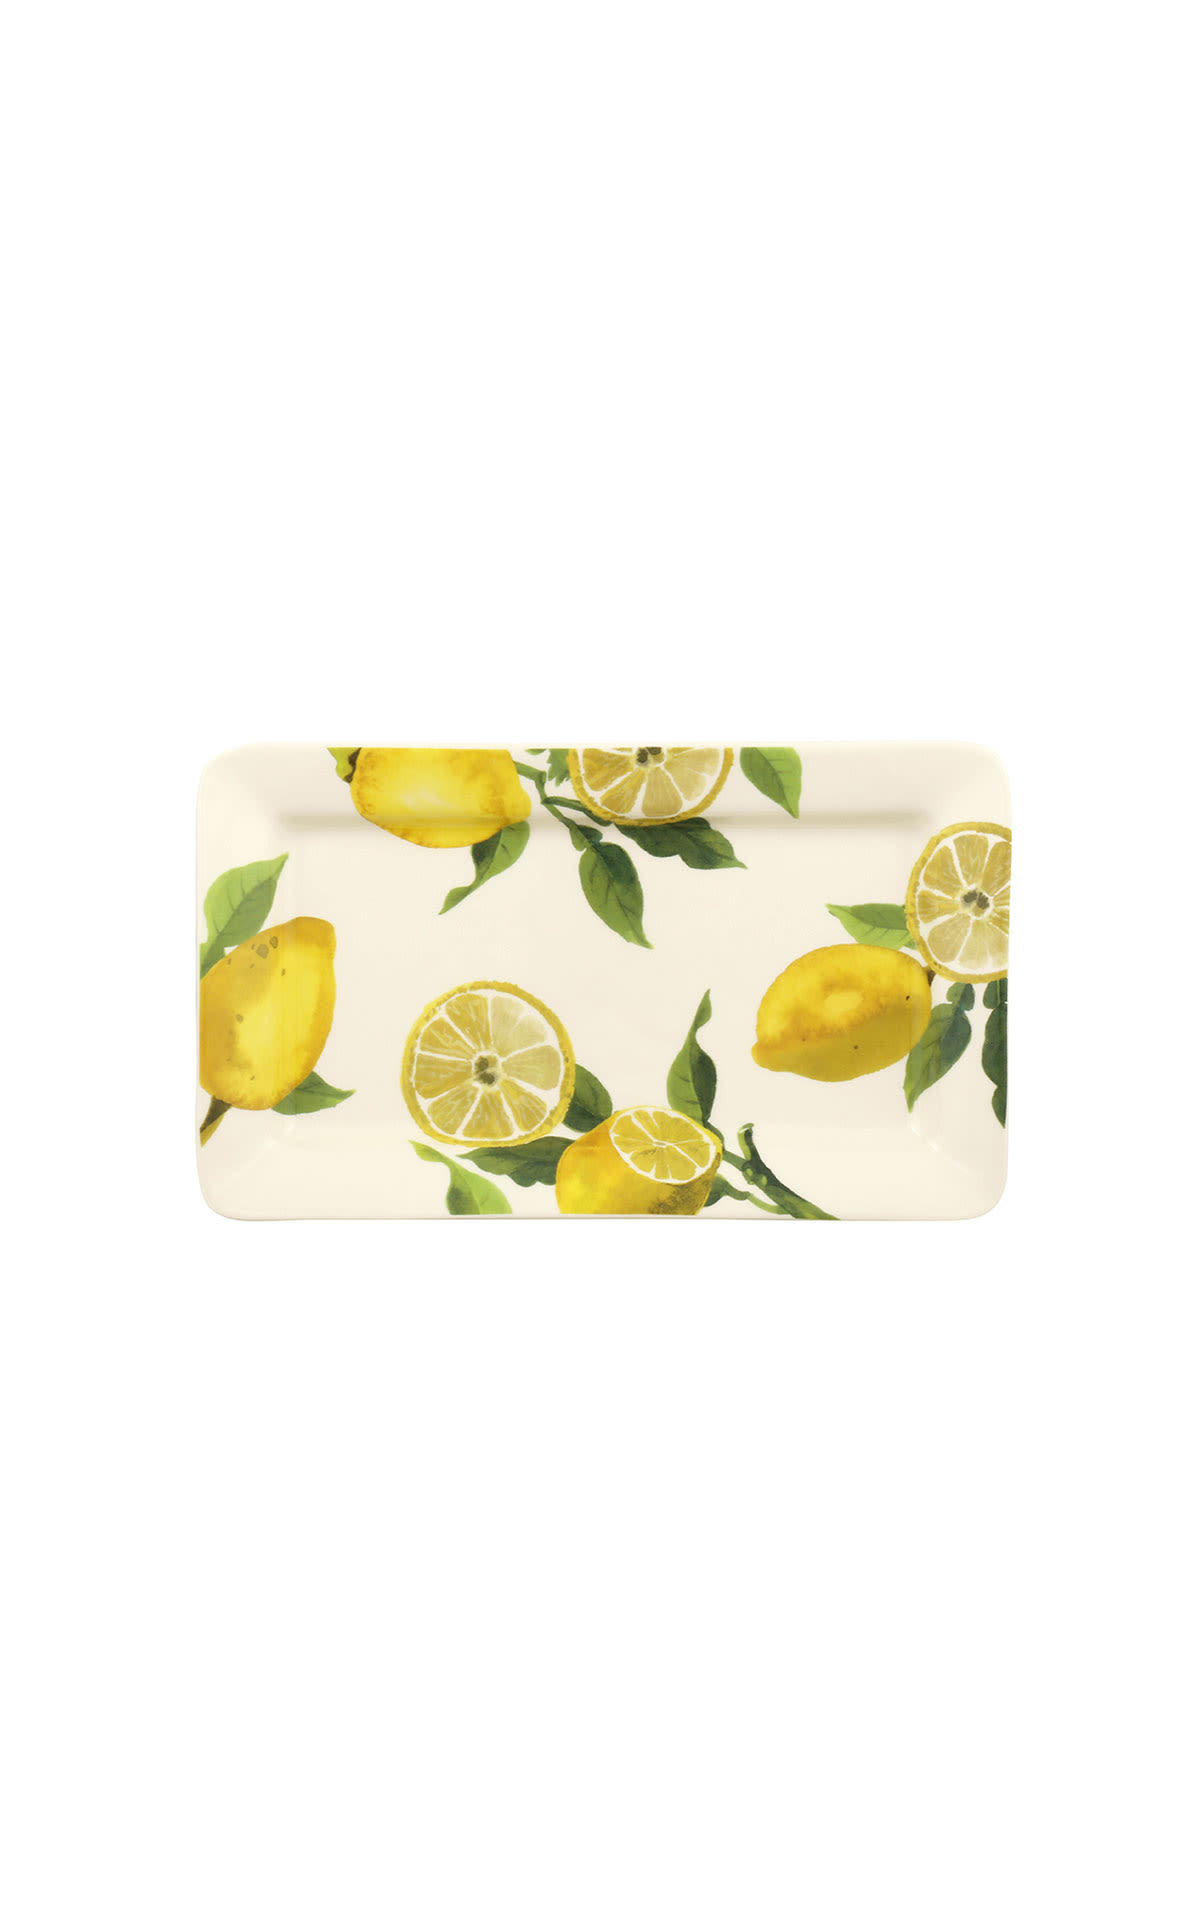 Emma Bridgewater Lemons oblong plate from Bicester Village